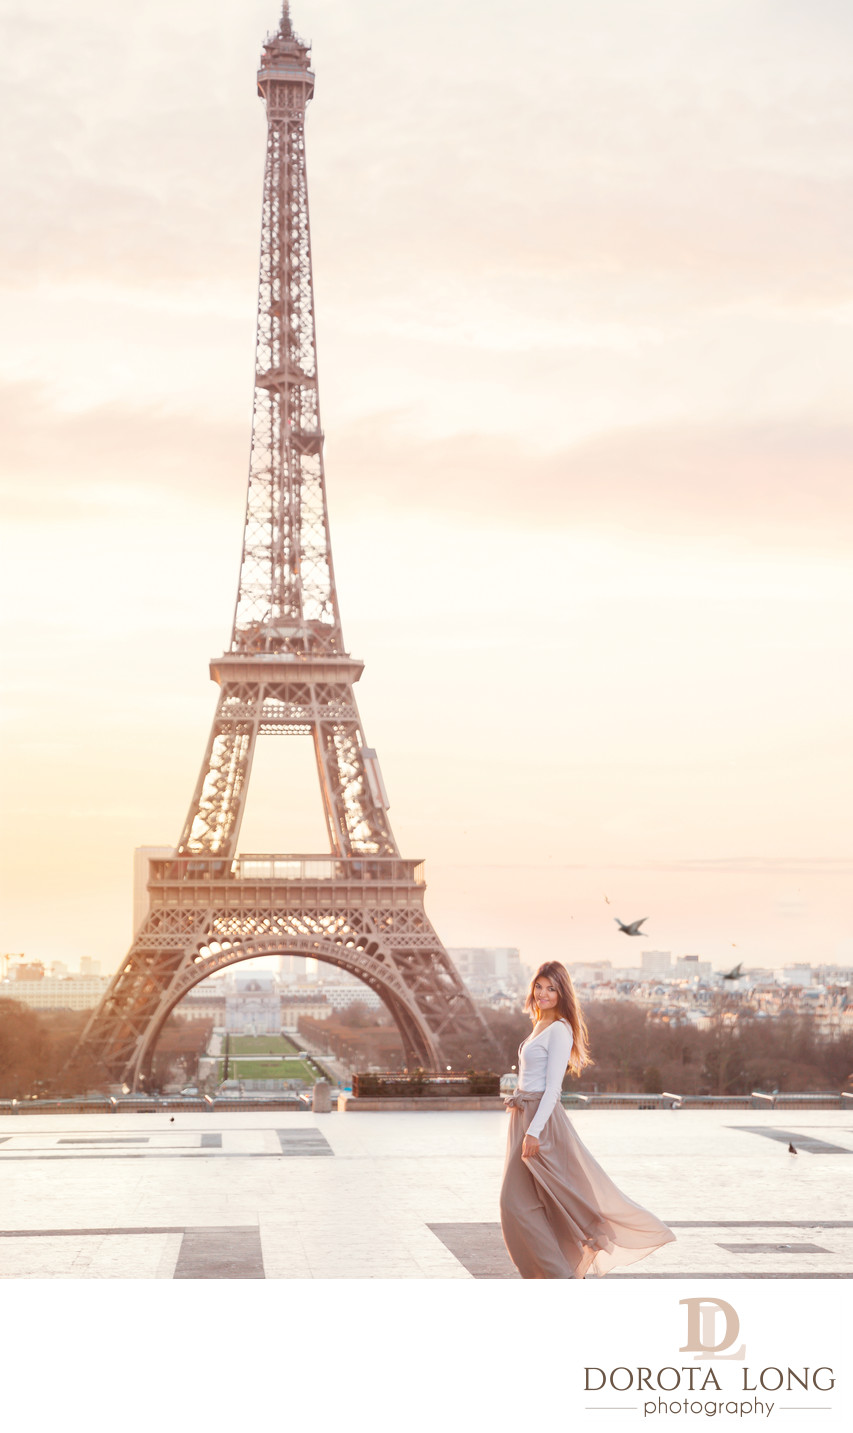 CT Photographer - Dream shoot in Paris France